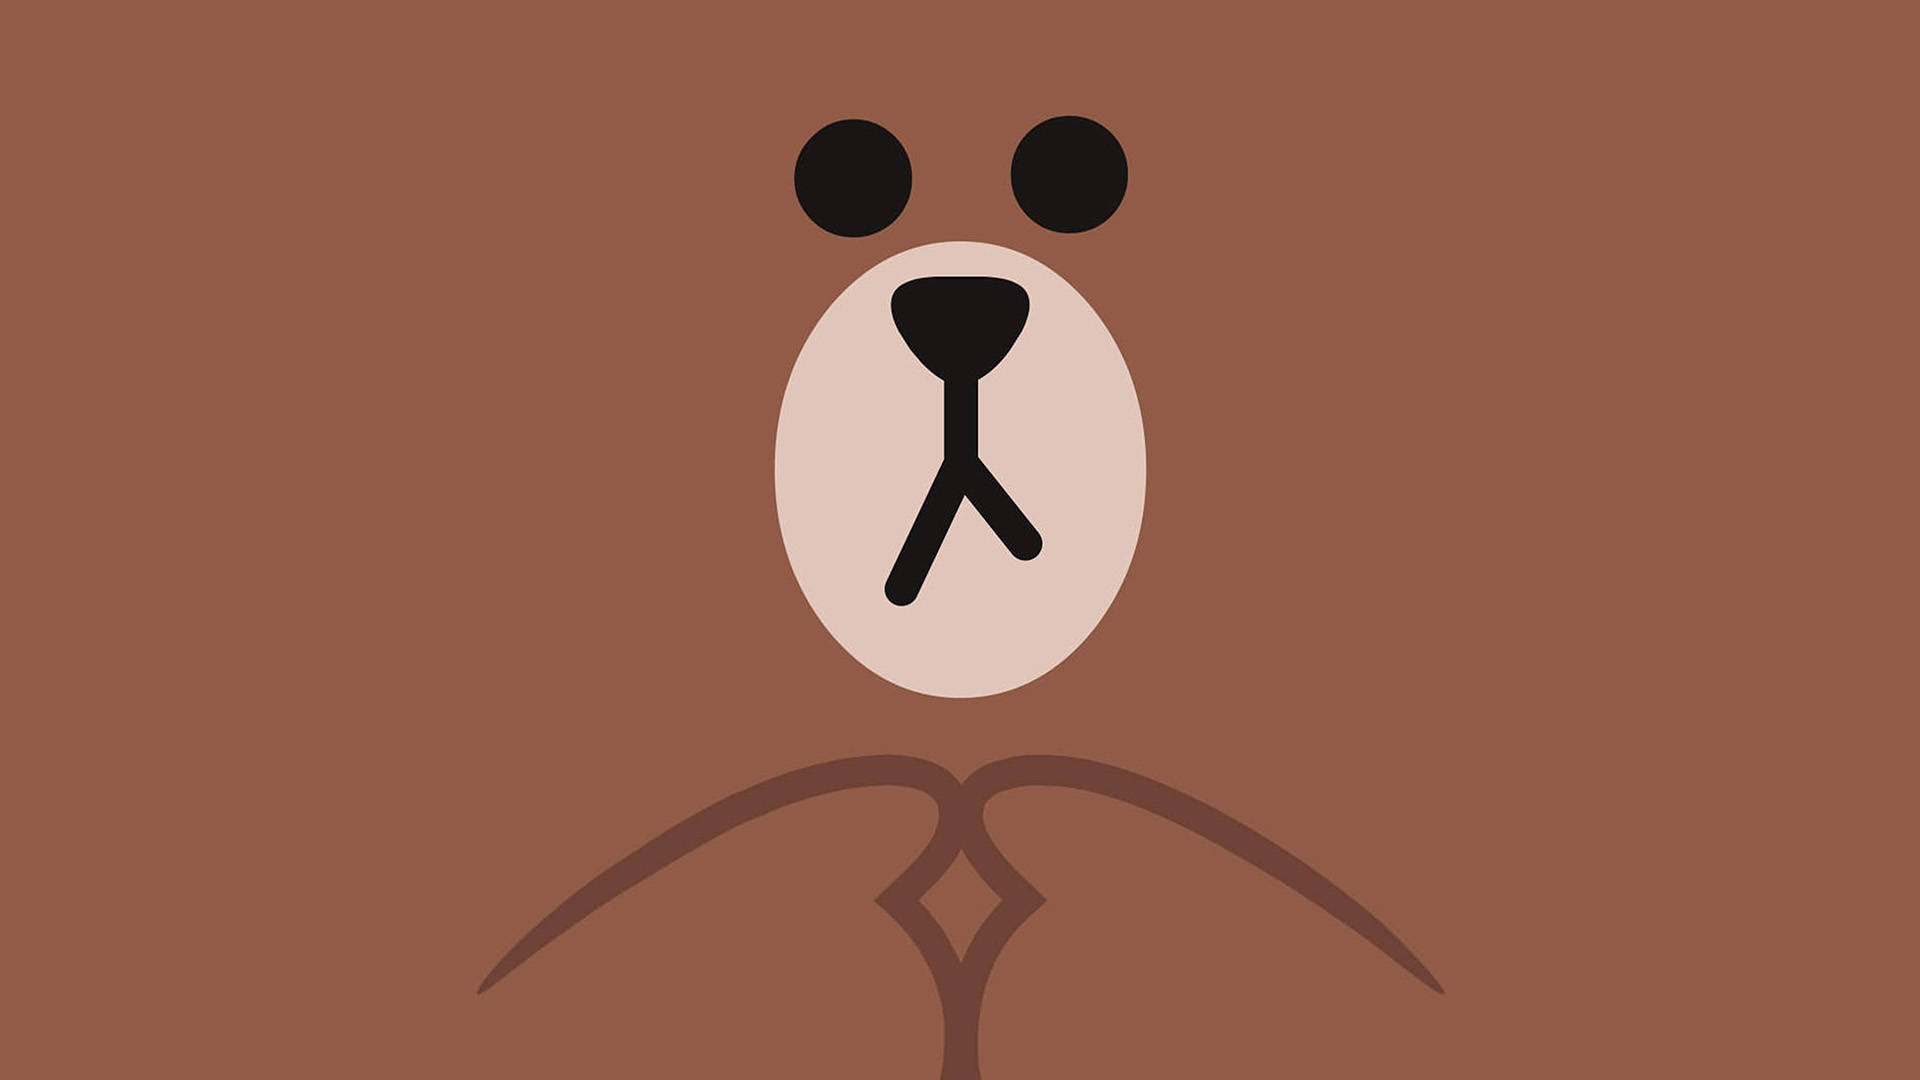 Brown Bear Character